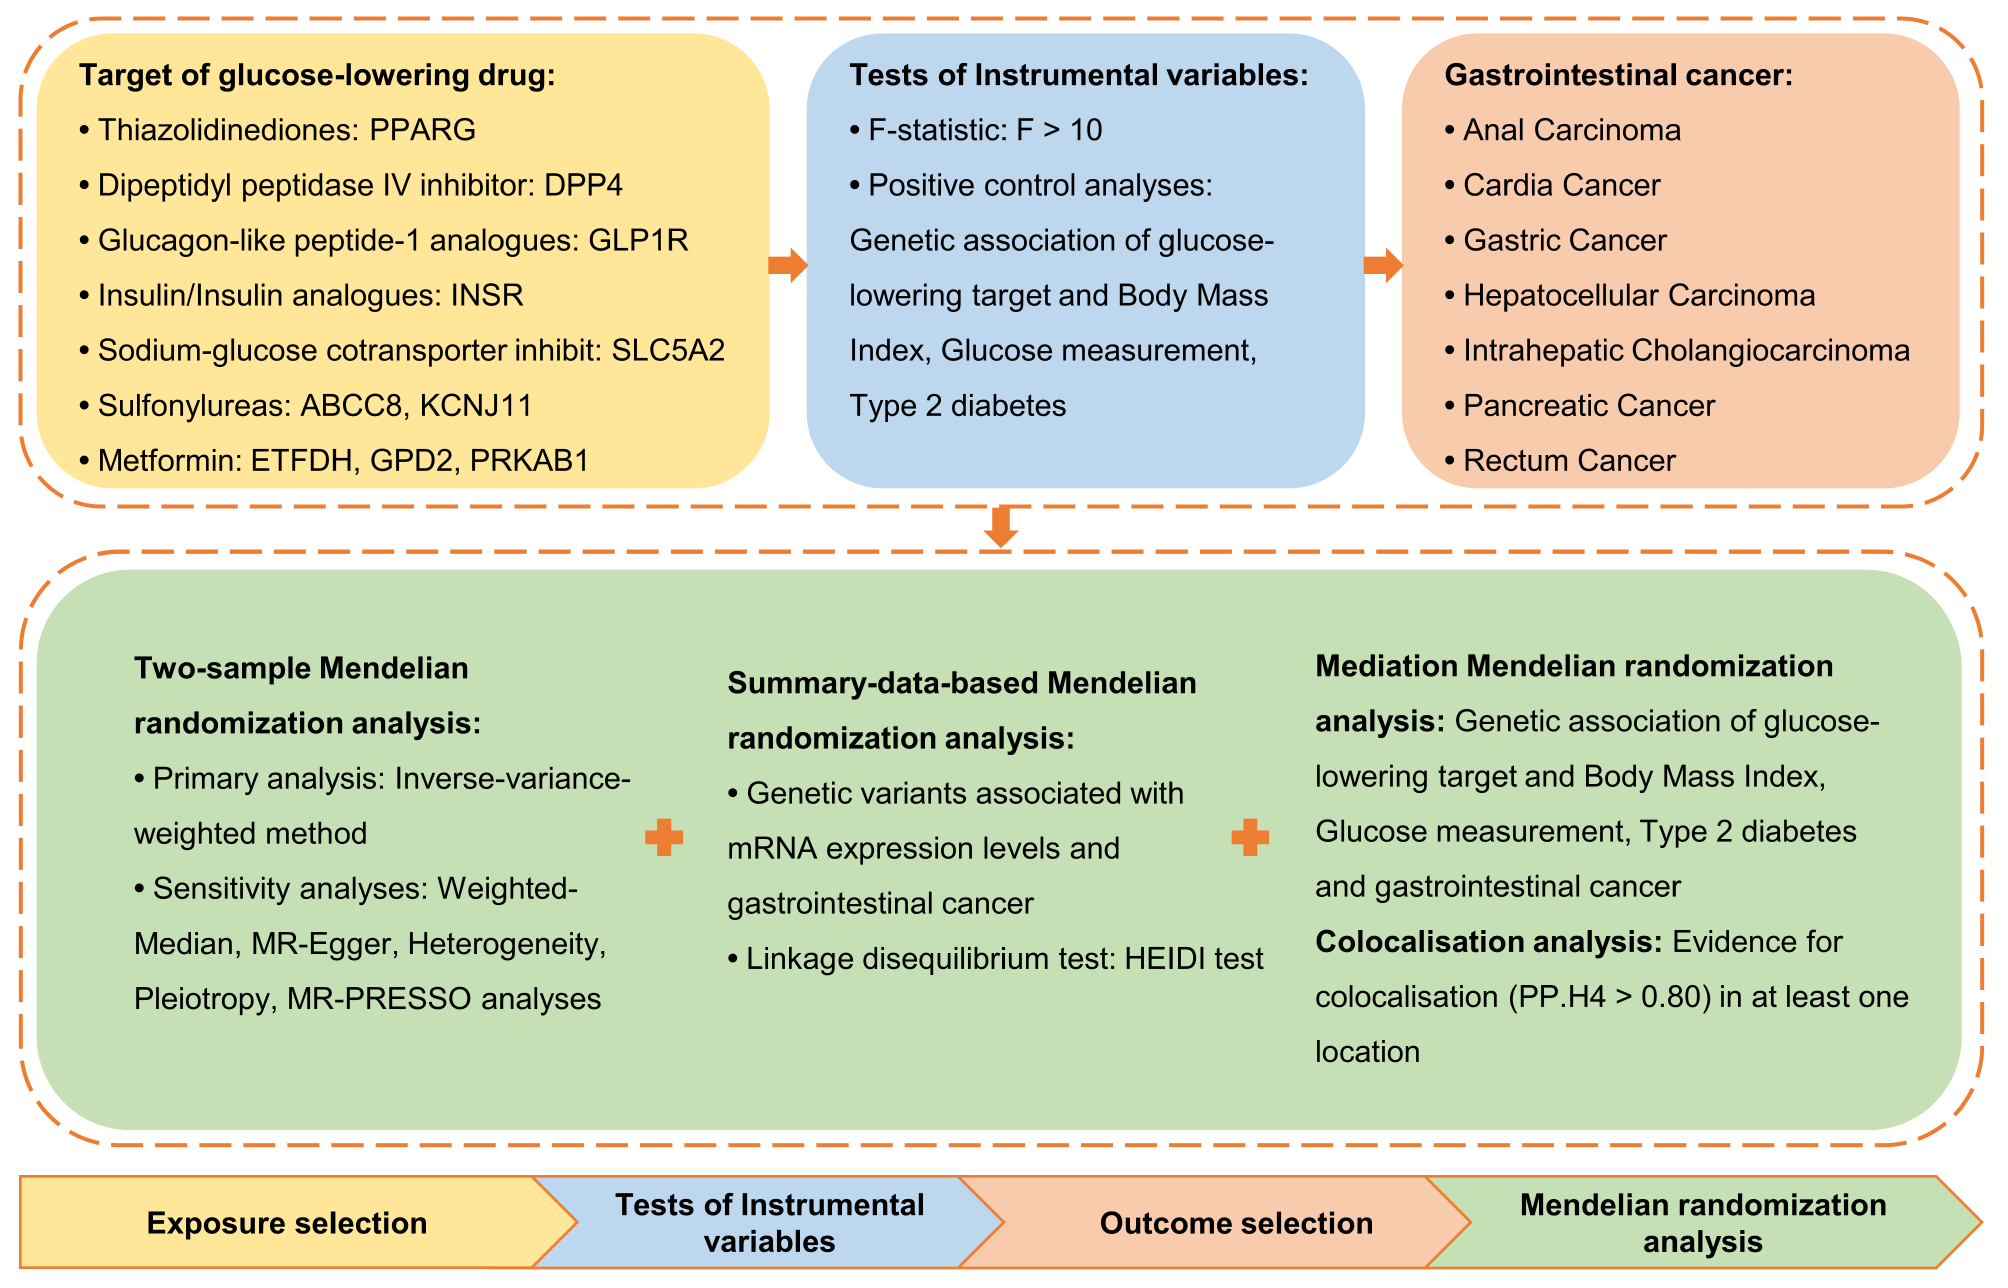 Association of glucose-lowering drug target and risk of gastrointestinal cancer: a mendelian randomization study